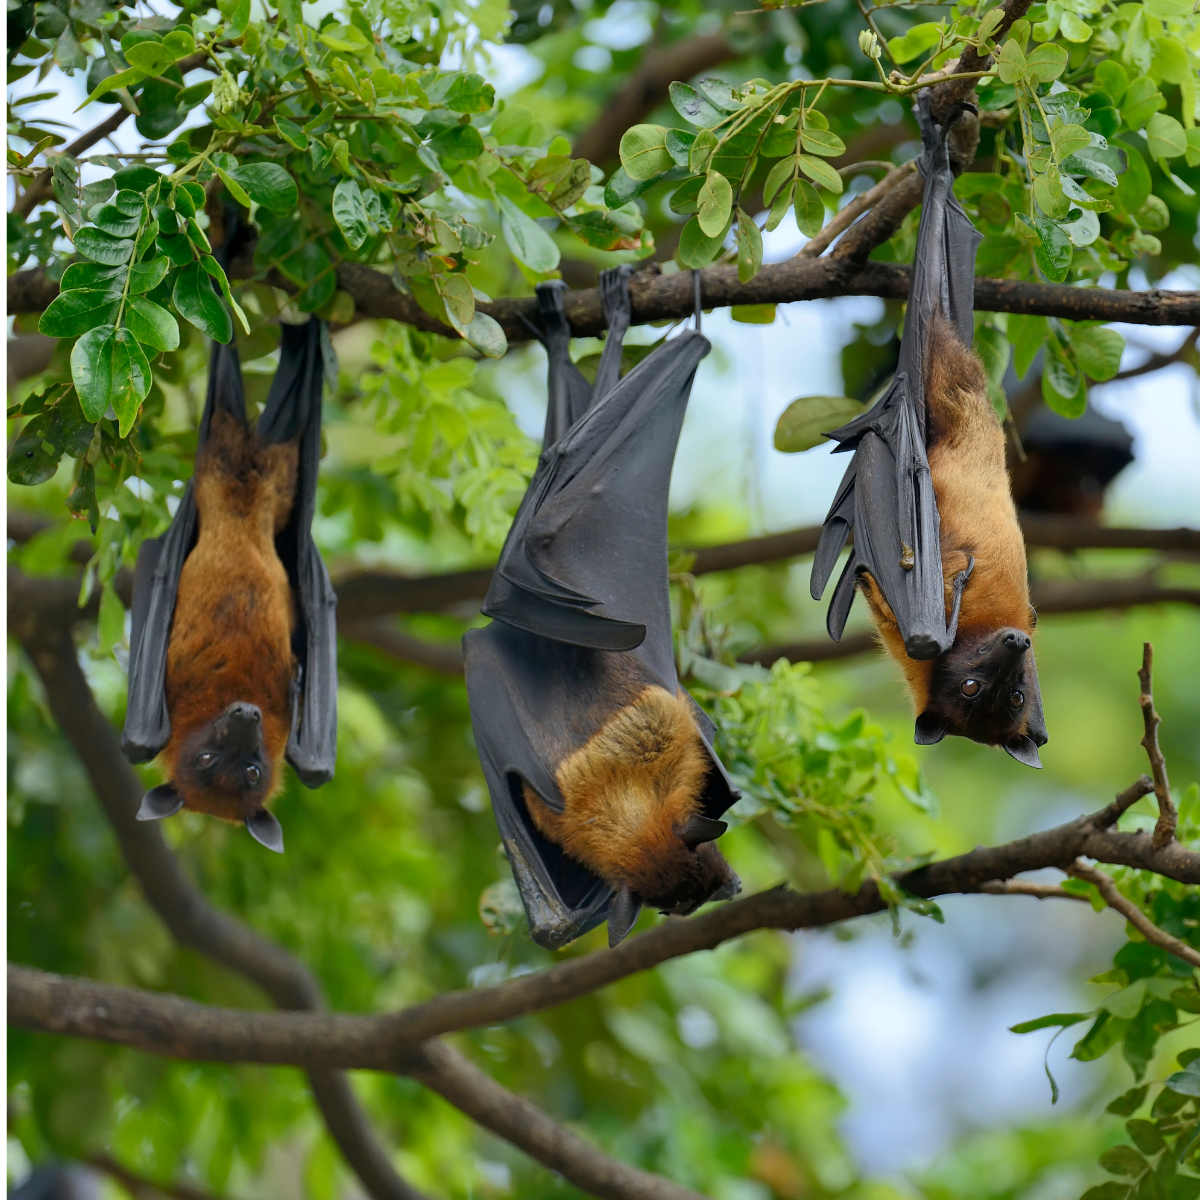 S4.10 Creatures of the night: the genetics of bats